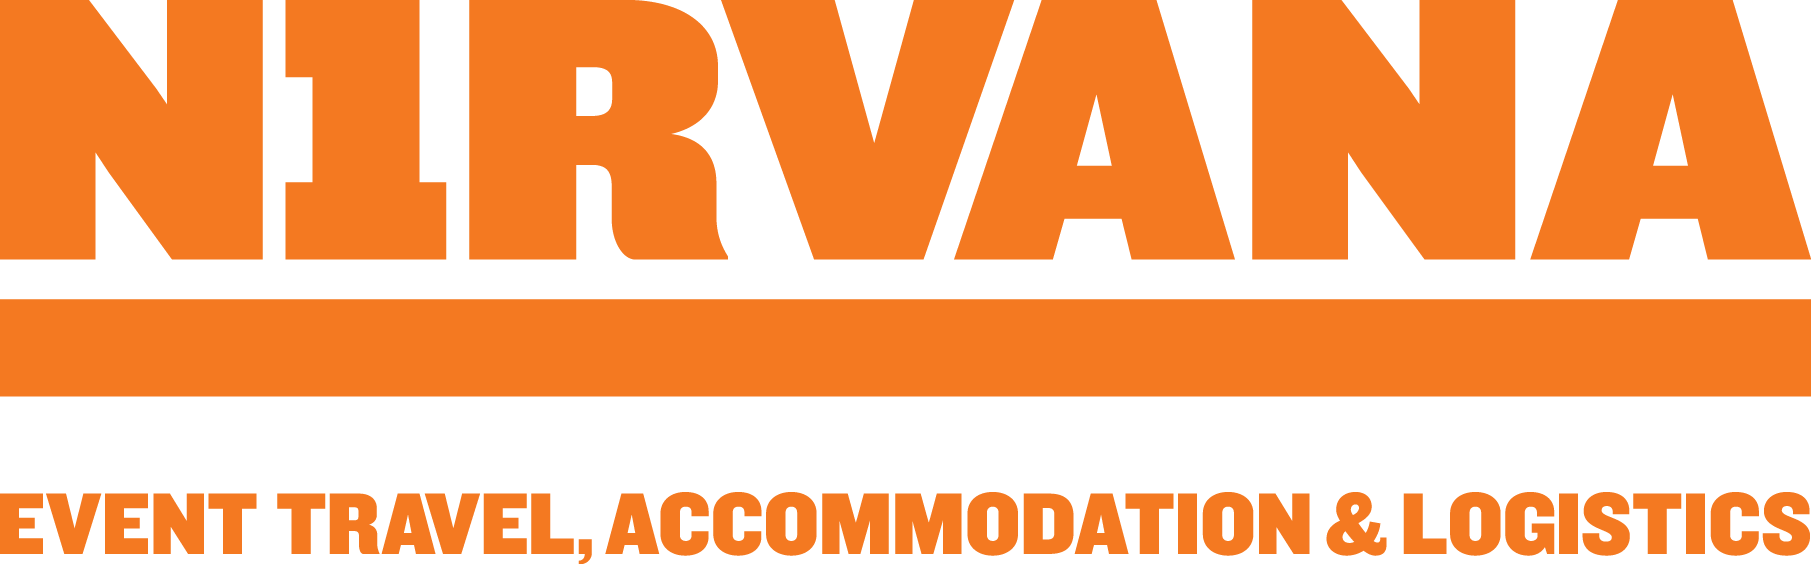 Official Nirvana Event Travel, Accommodation and Logistics partner logo